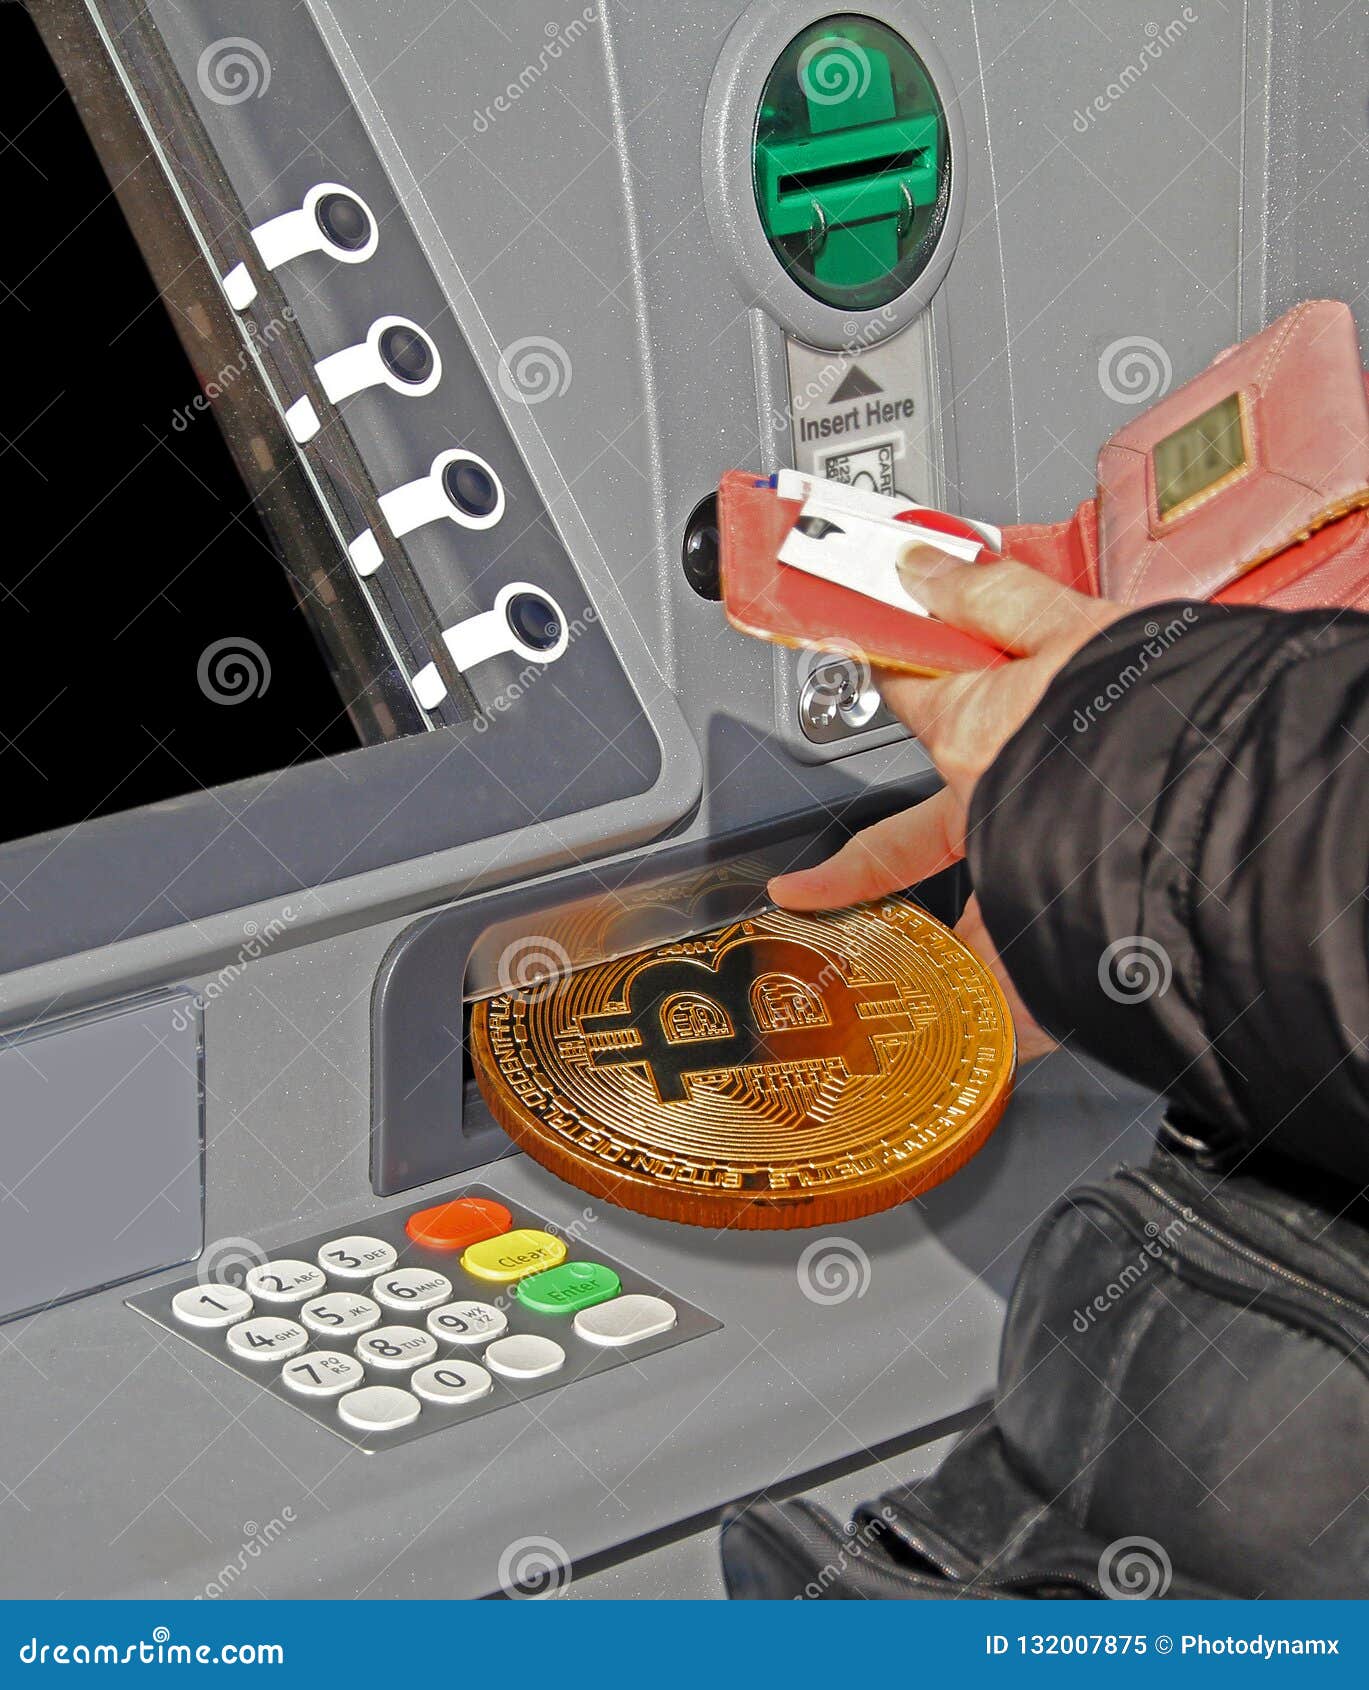 crypto coin machine